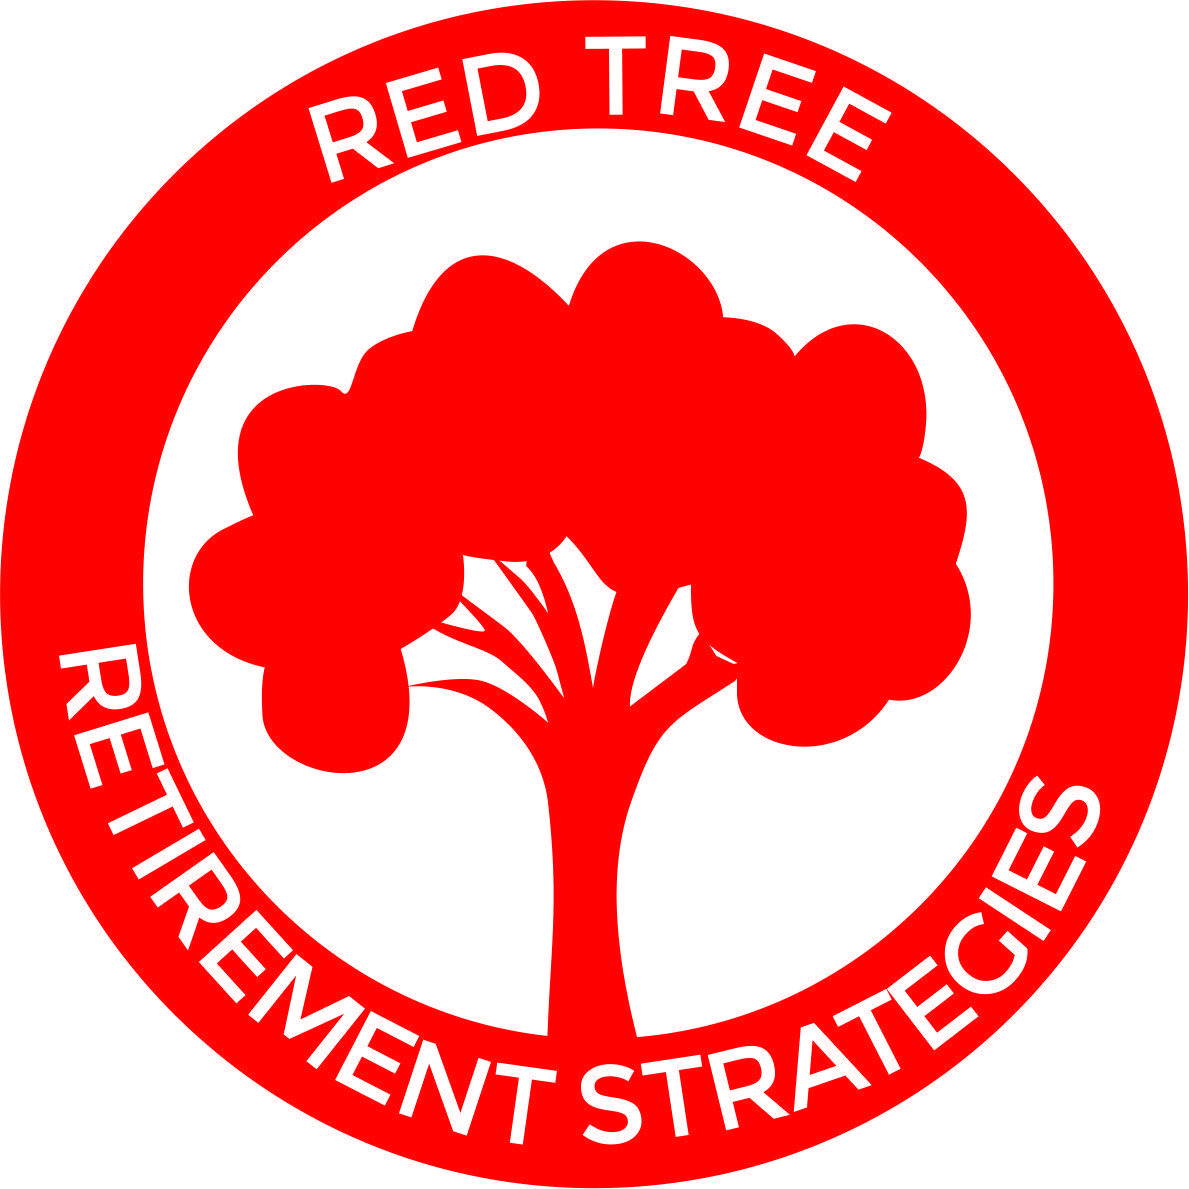 Red Tree Circle Logo - Serious, Upmarket, Life Insurance Logo Design for Red Tree ...